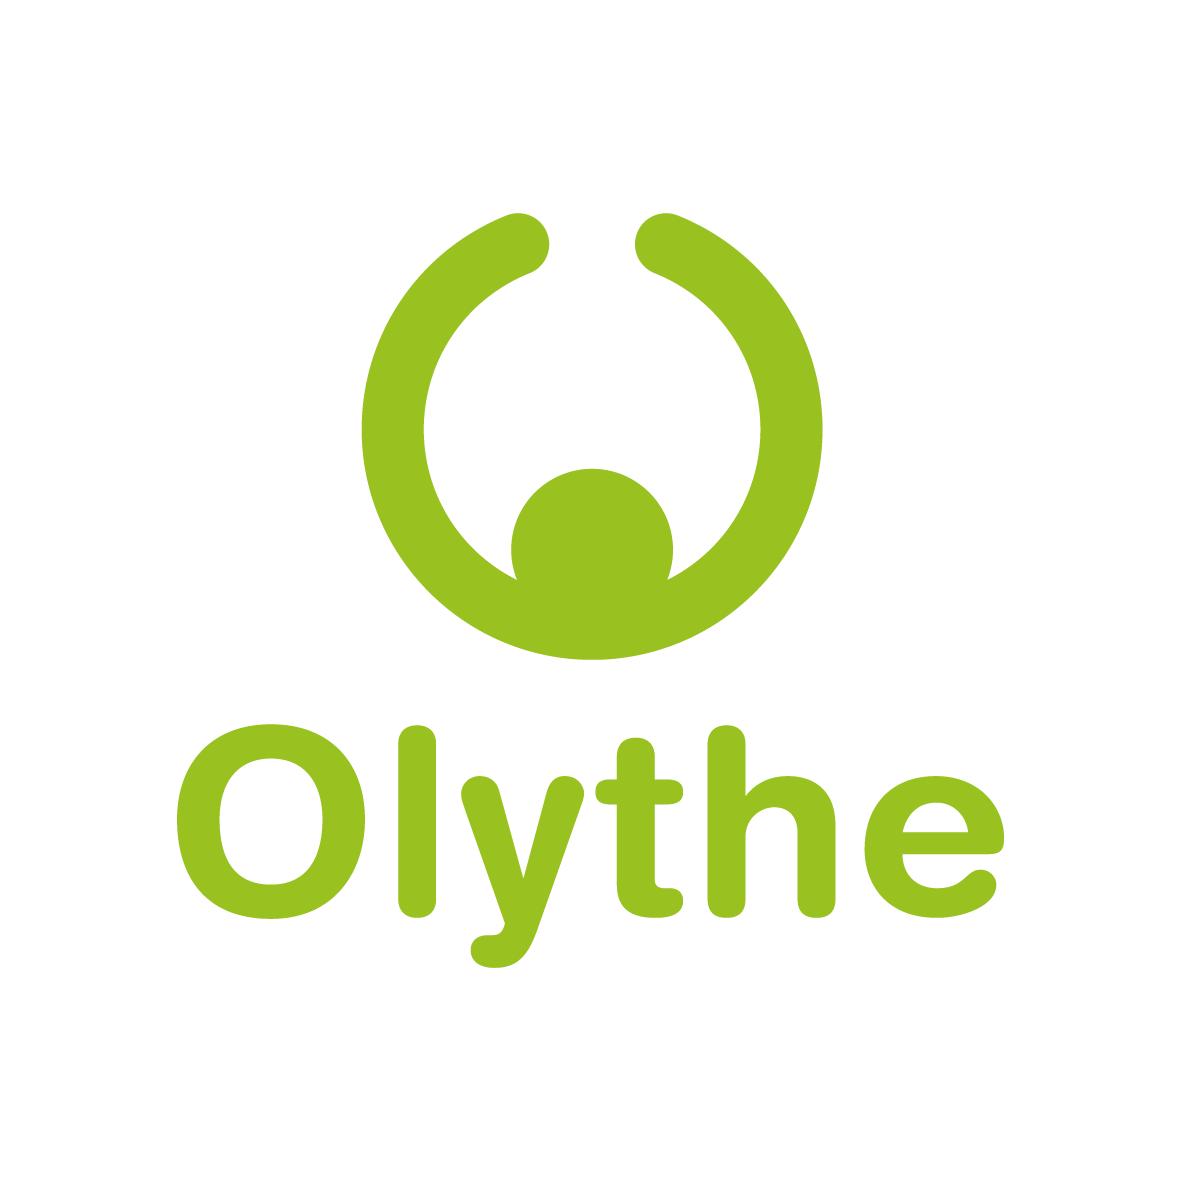 Olythe